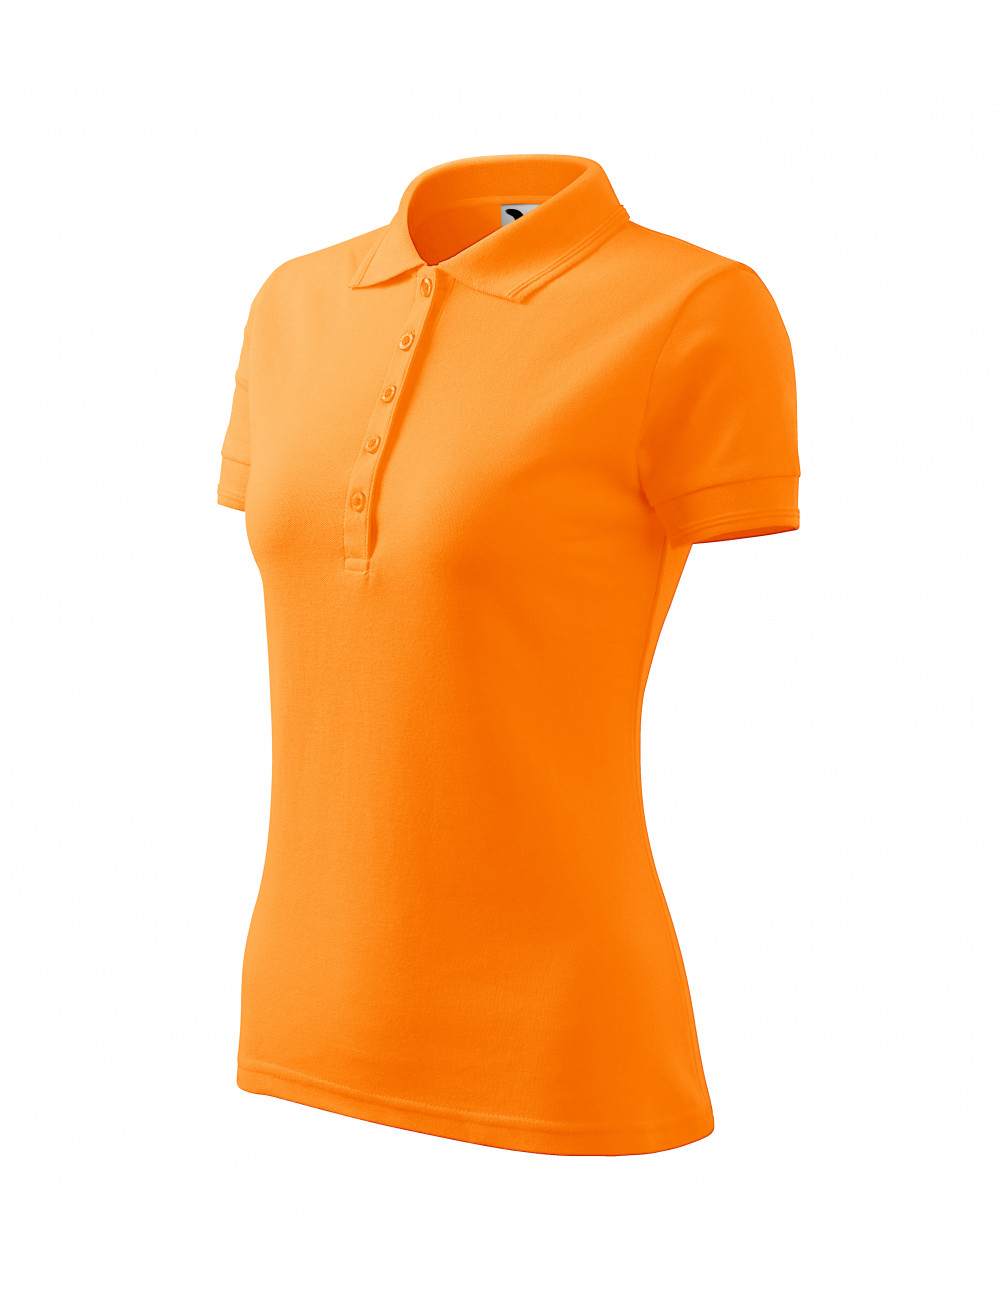 Ladies polo shirt pique polo 210 tangerine Adler Malfini